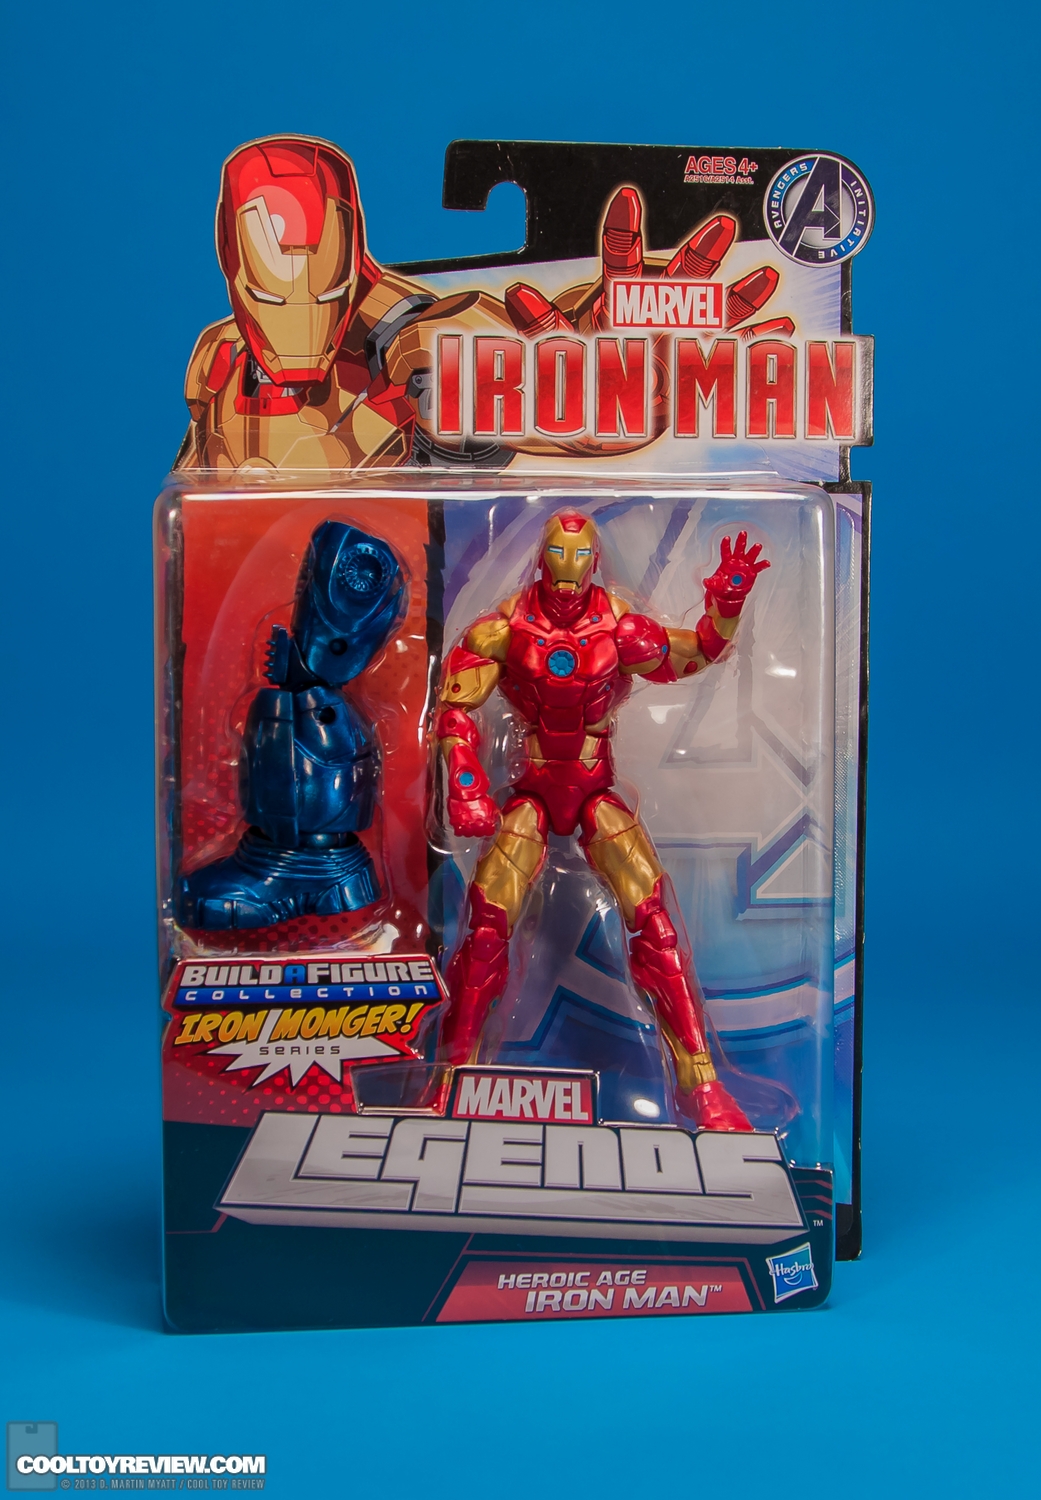 Heroic-Age-Iron-Man-Marvel-Legends-Iron-Monger-Series-012.jpg